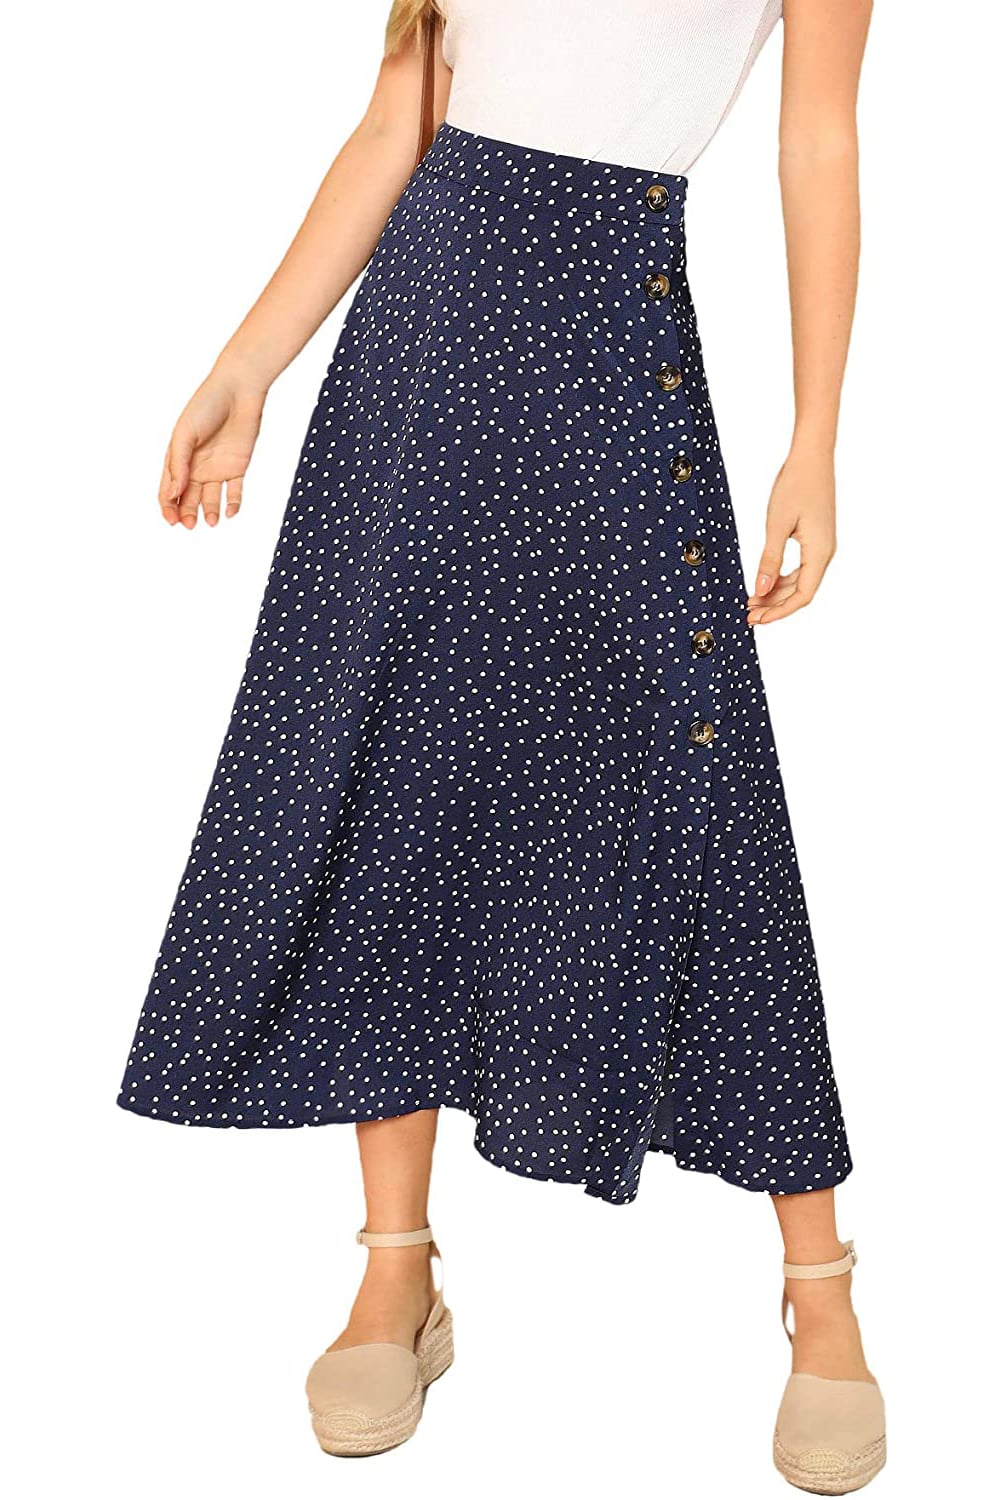 SheIn Womens Polka Dot A-Line Button Side Split Midi Knee Length Skirt 